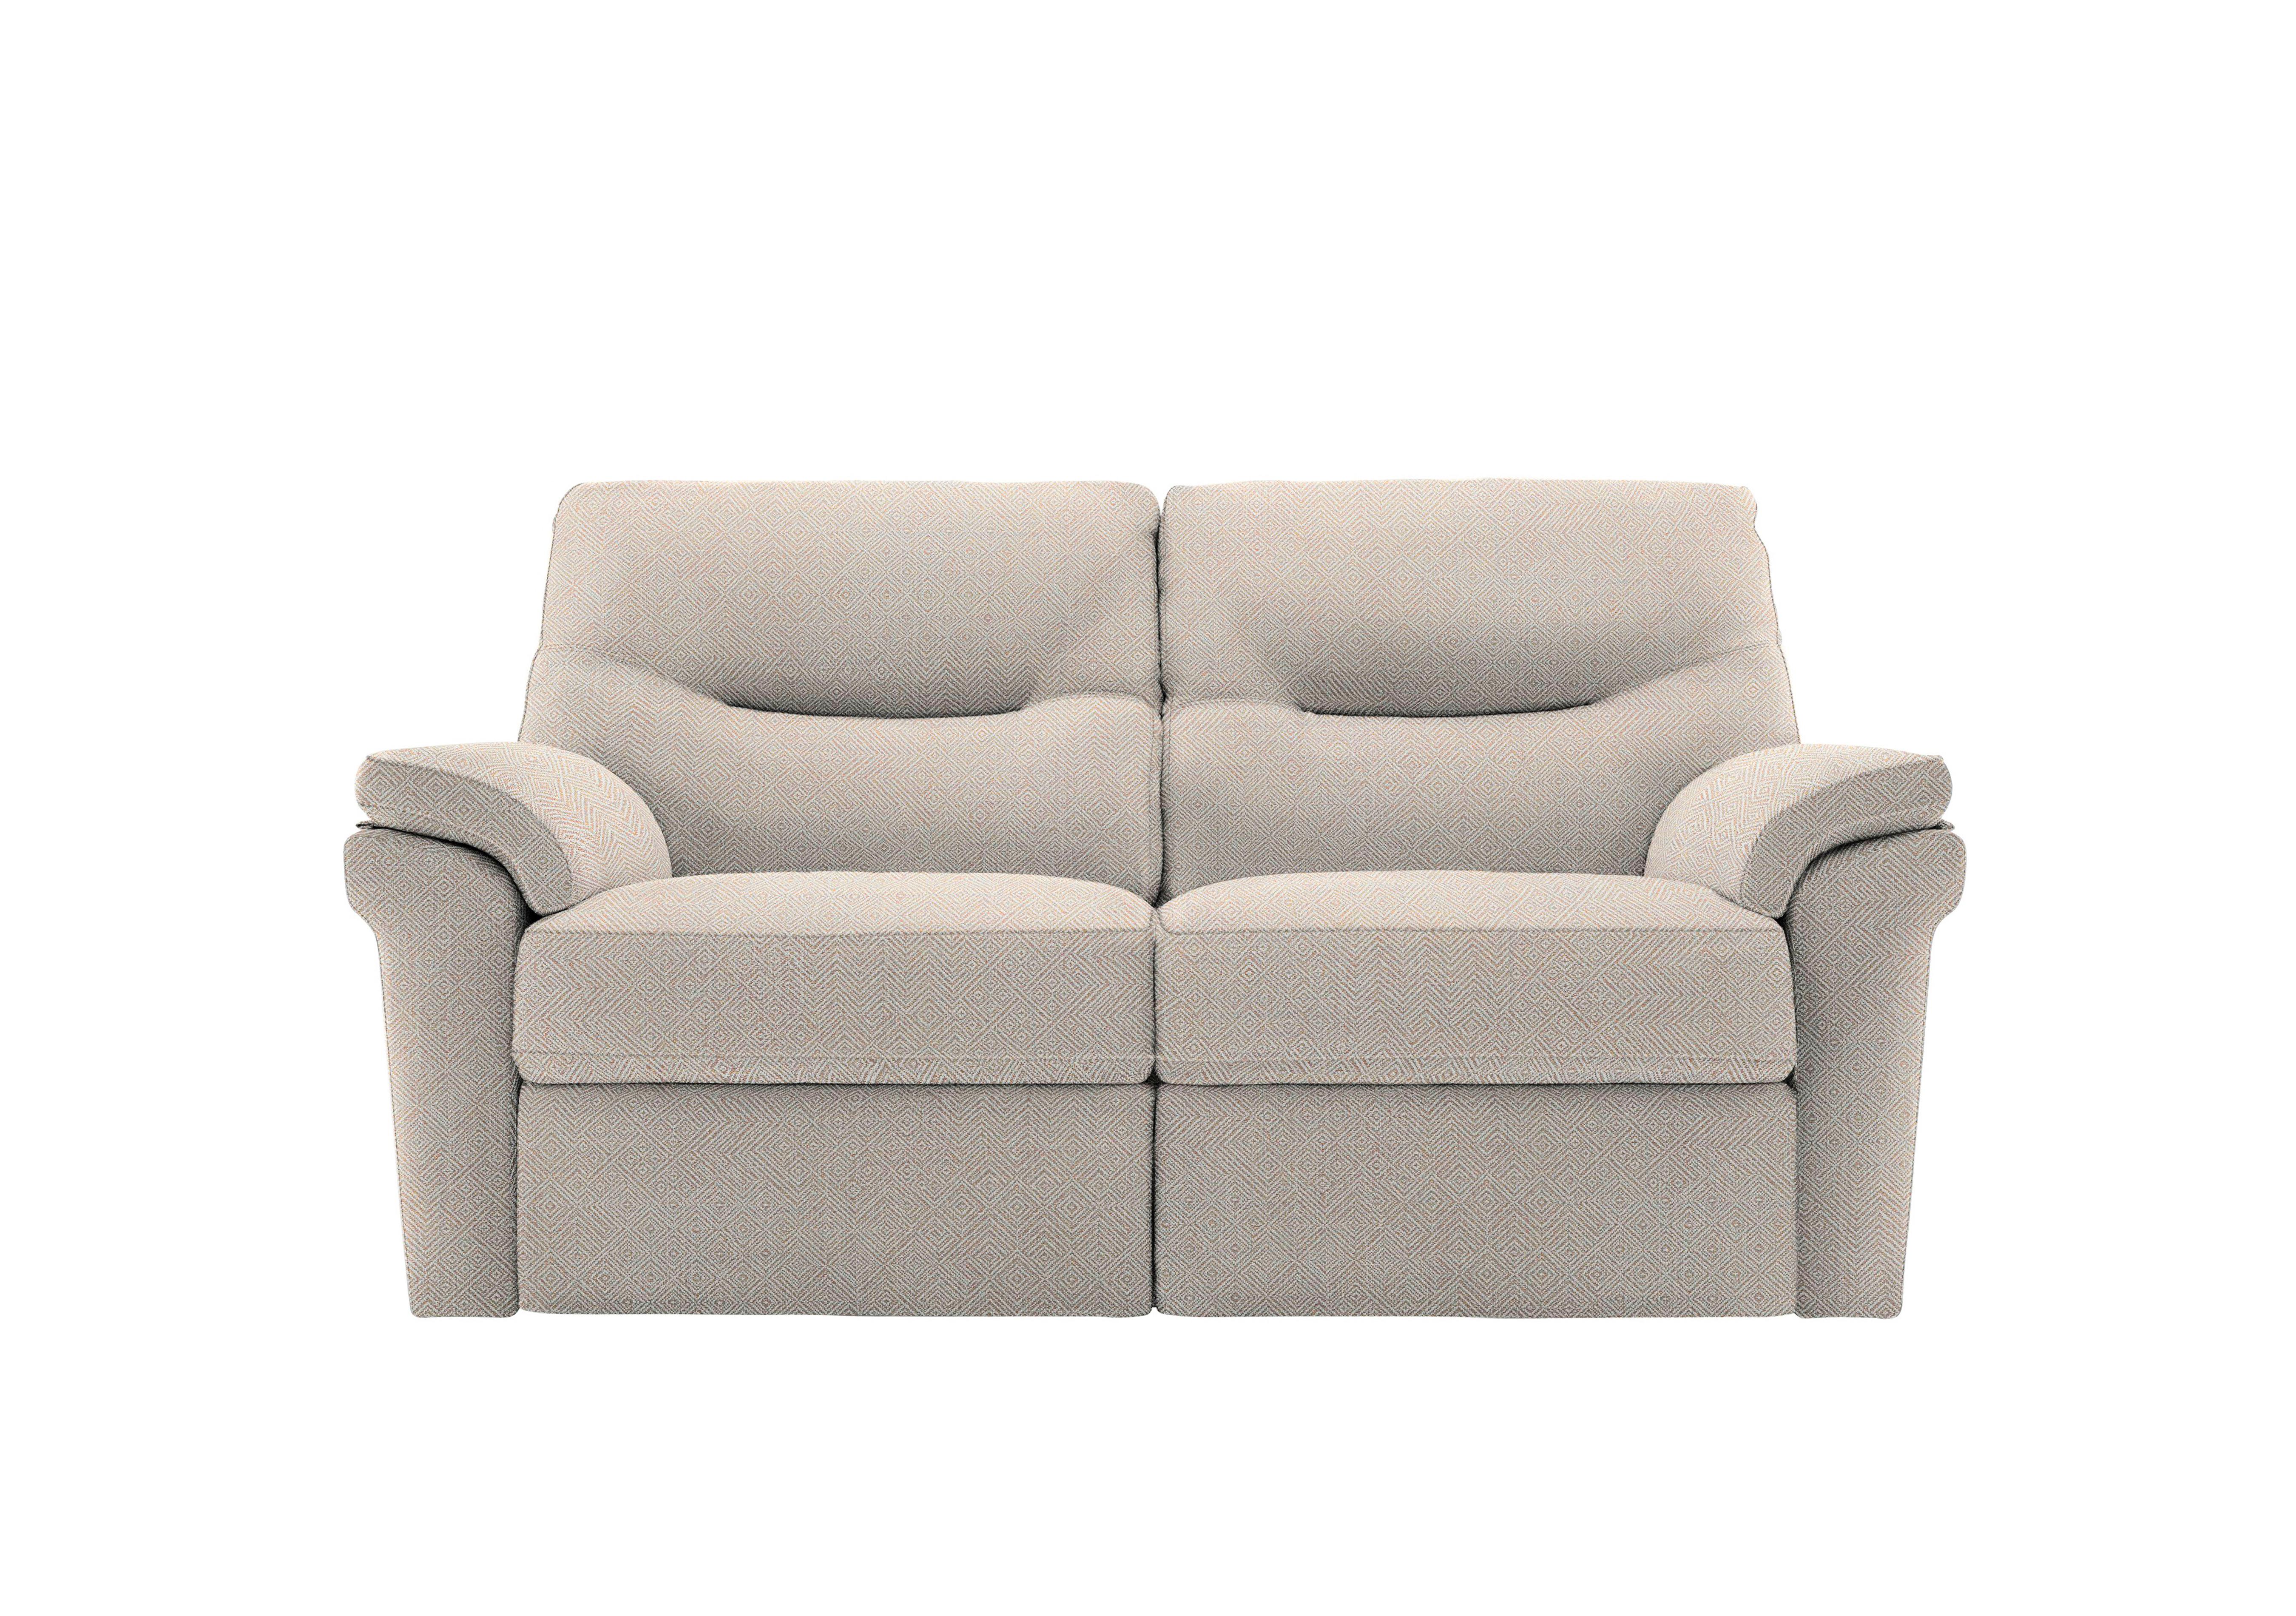 Seattle 2 Seater Fabric Power Recliner Sofa with Power Lumbar in B011 Nebular Blush on Furniture Village